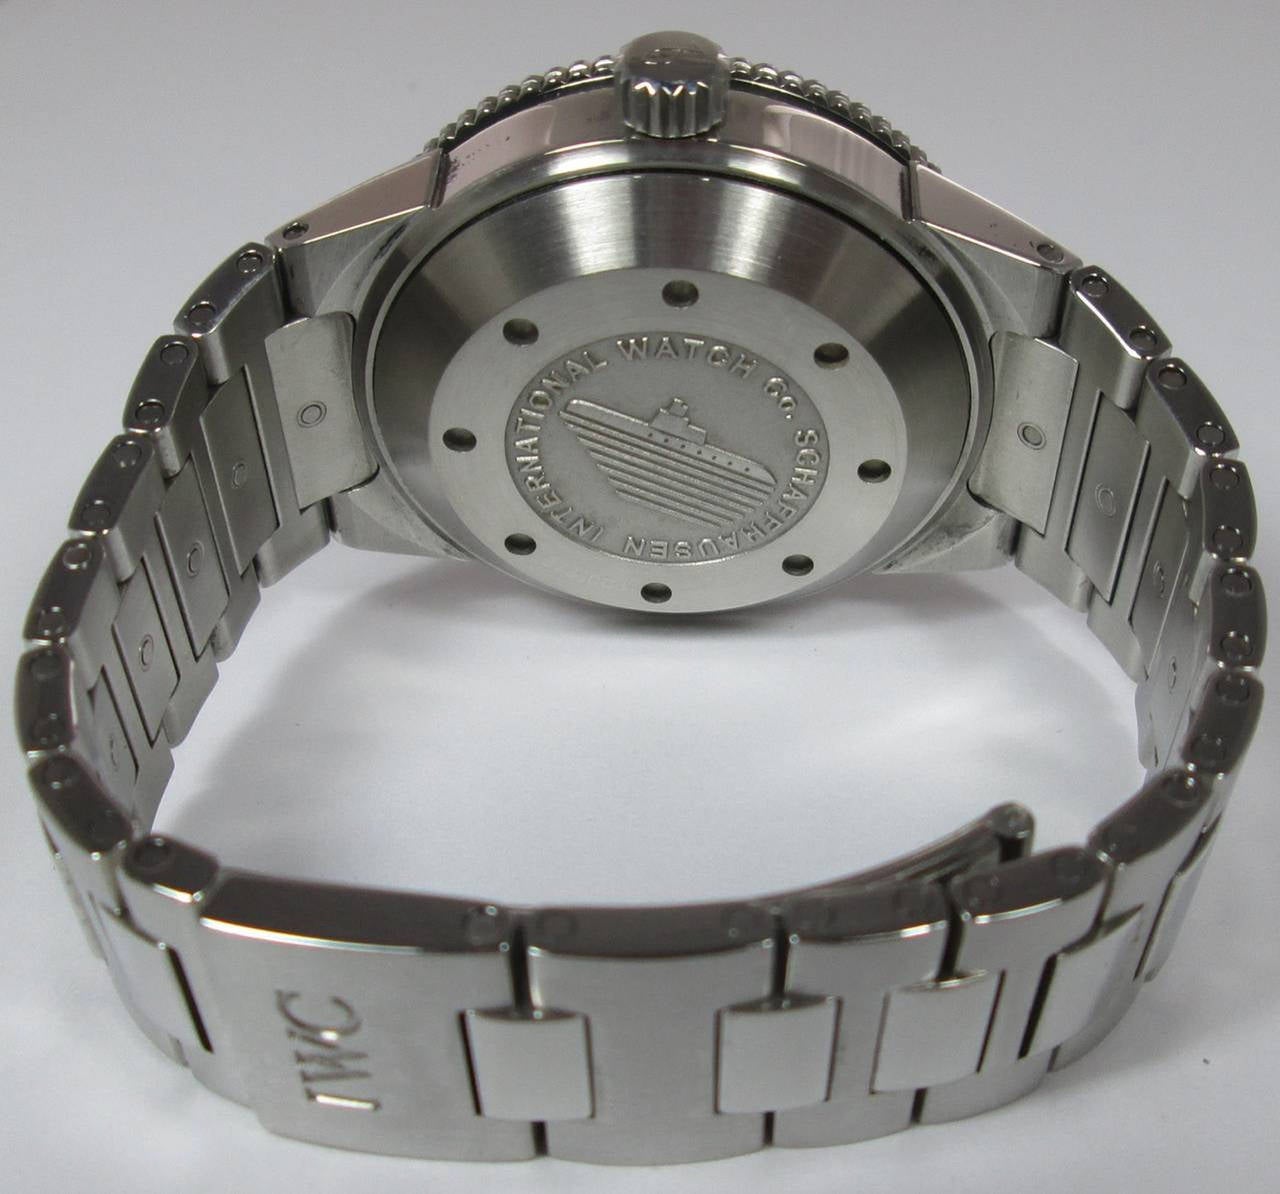 Contemporary IWC Schaffhausen Stainless Steel Automatic Aquatimer 2000m Wristwatch